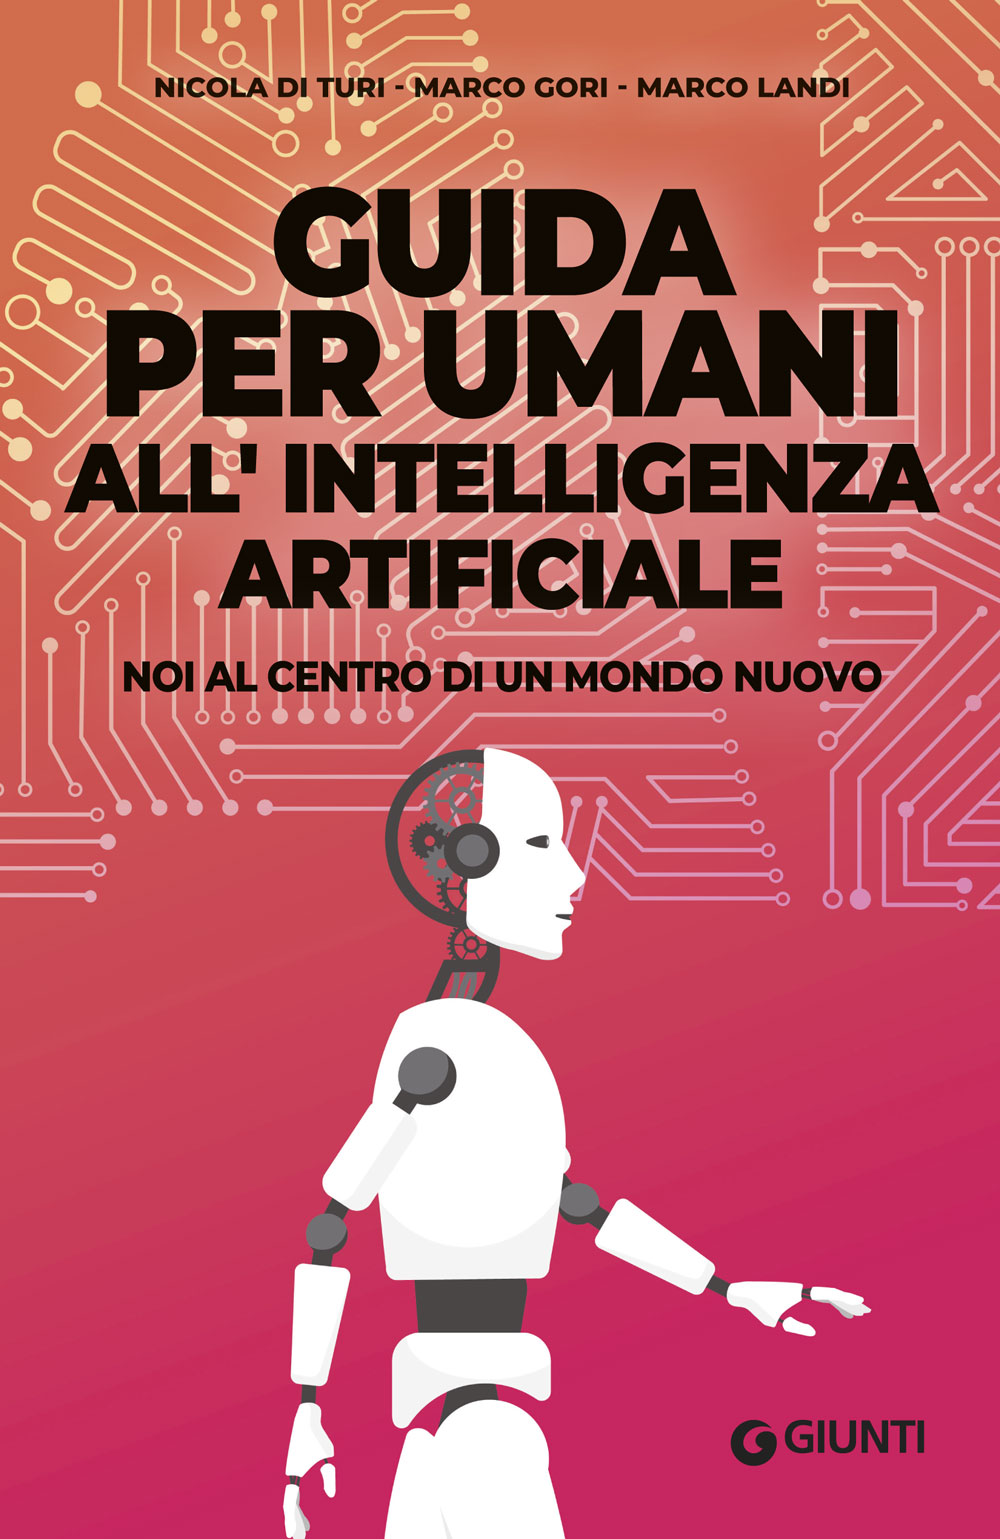 Guida per umani all'intelligenza artificiale